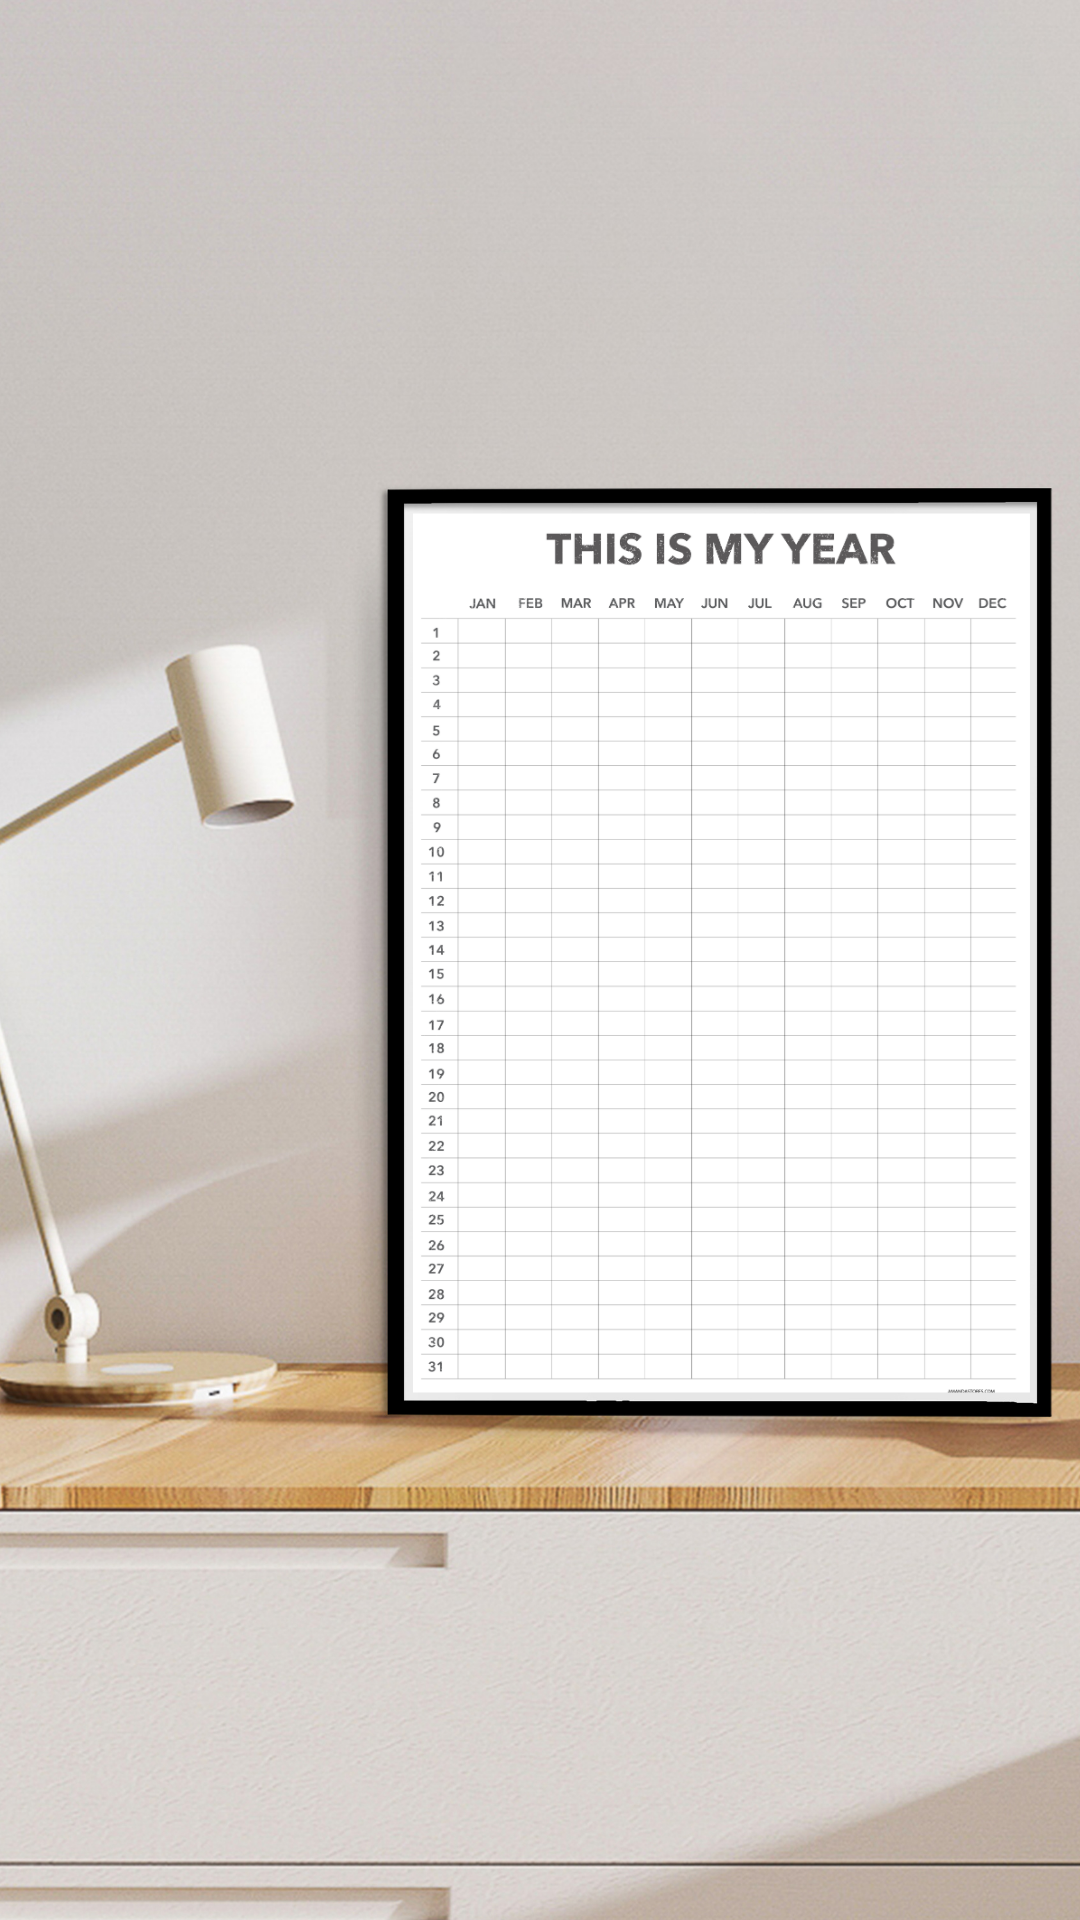 This is My Year - Reusable Wall Calendar - DIGITAL COPY